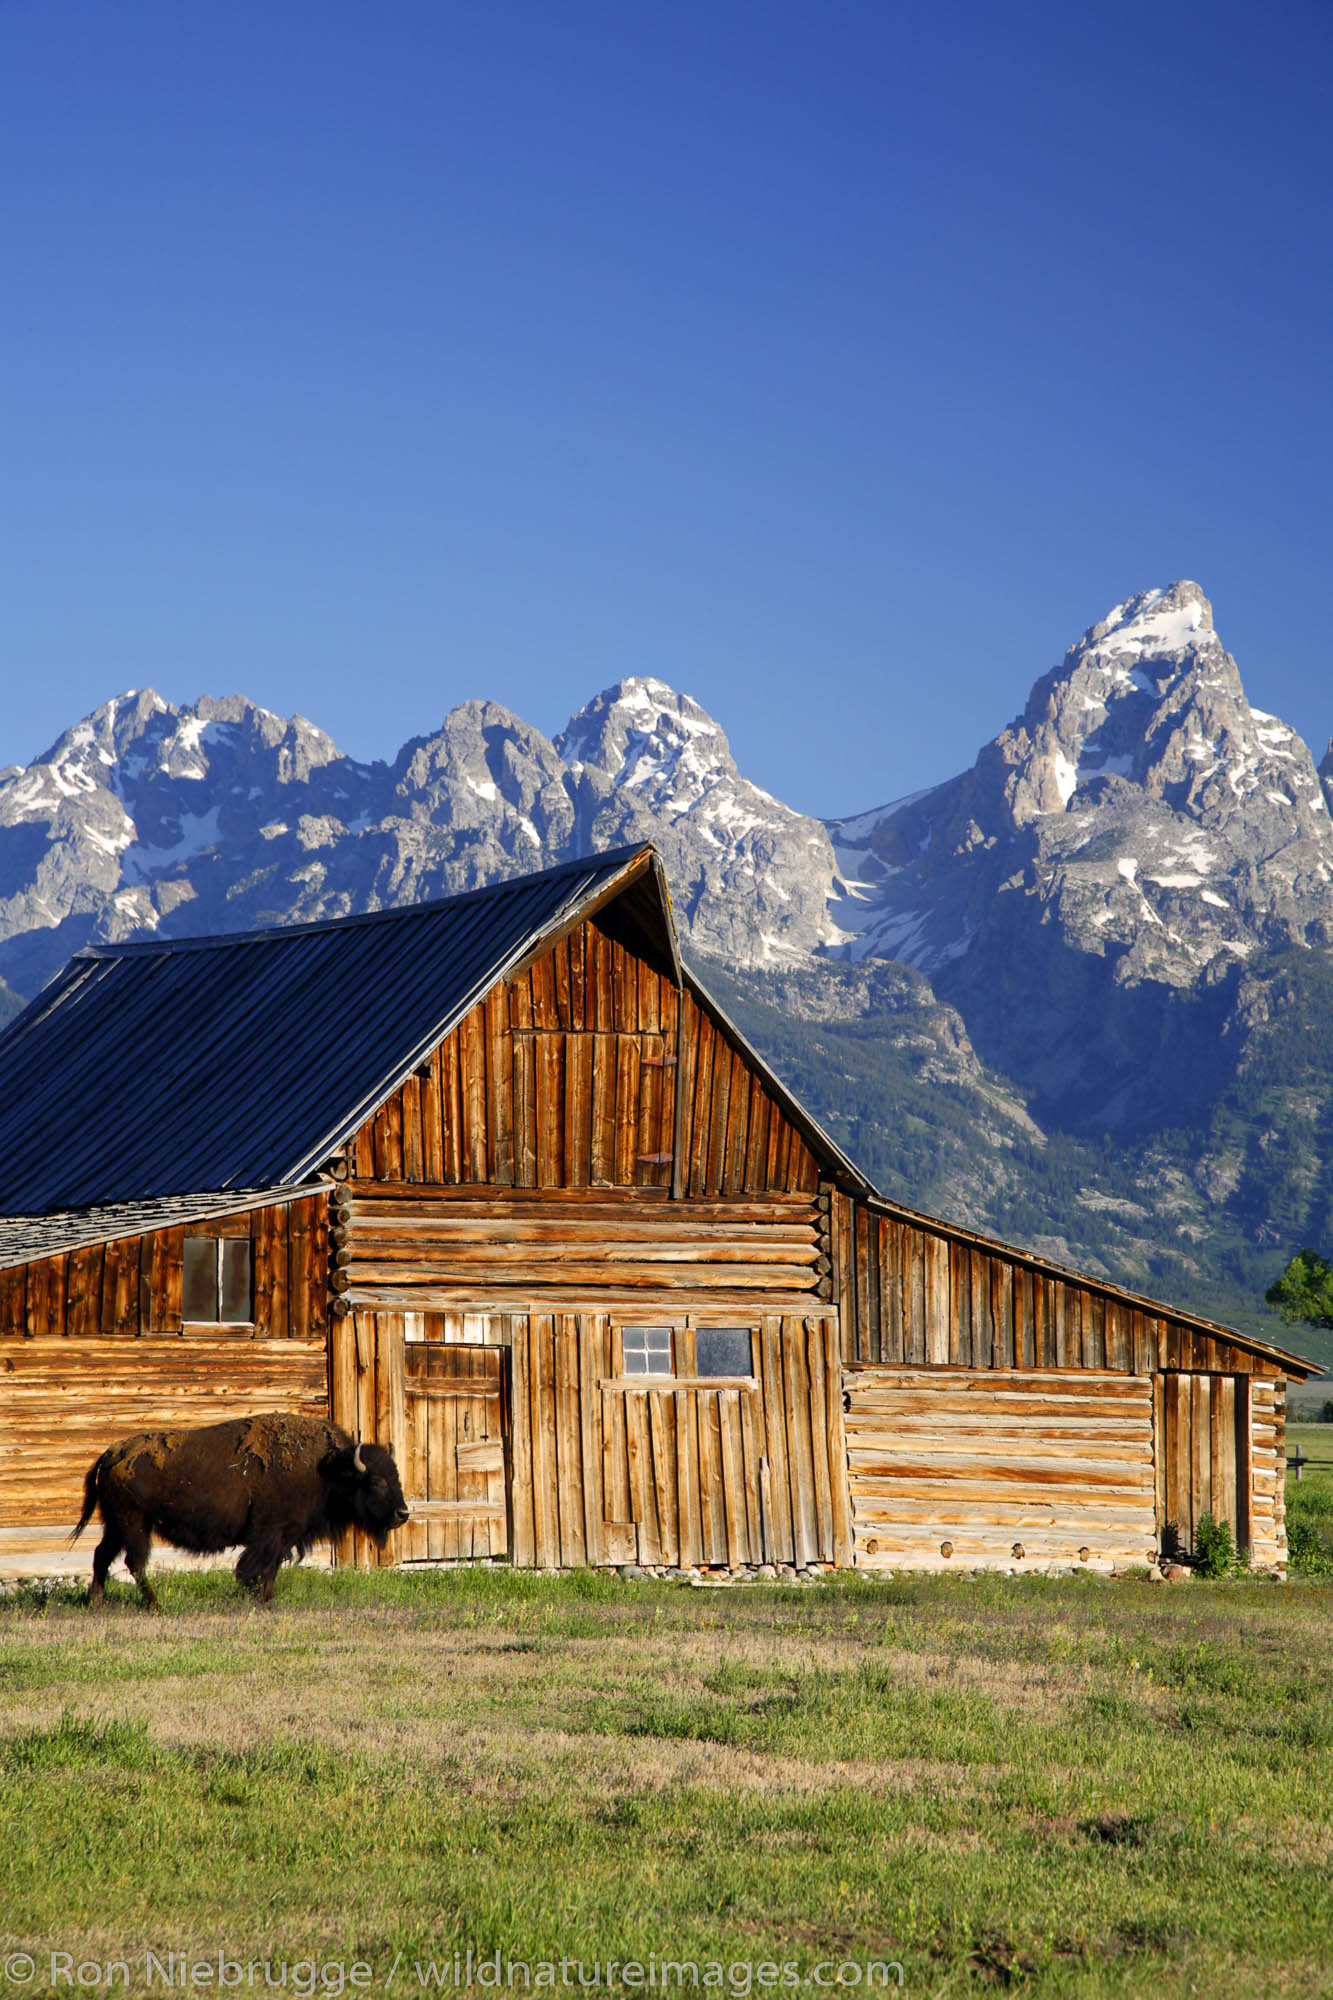 Buffalo in front of barn on Mormon Row, Grand Teton National Park, Wyoming.